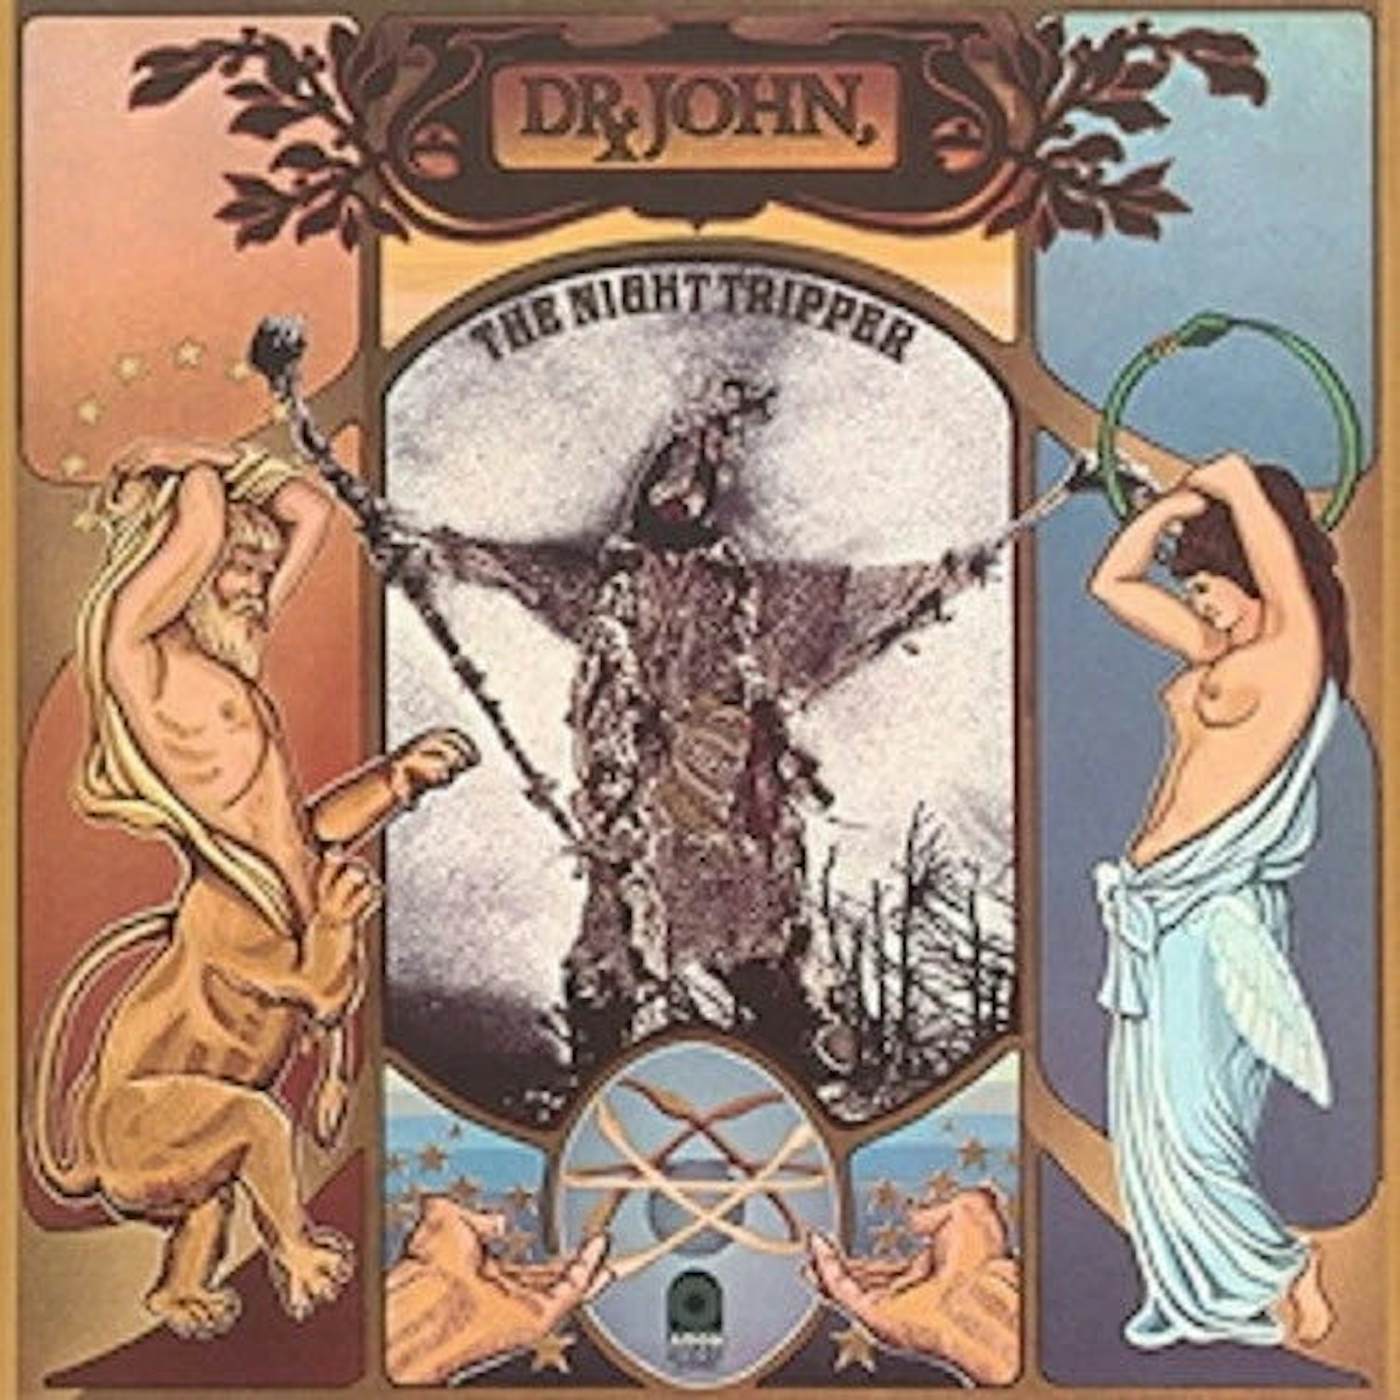 Dr. John The Night Tripper - The Sun, Moon & Herbs $44.47